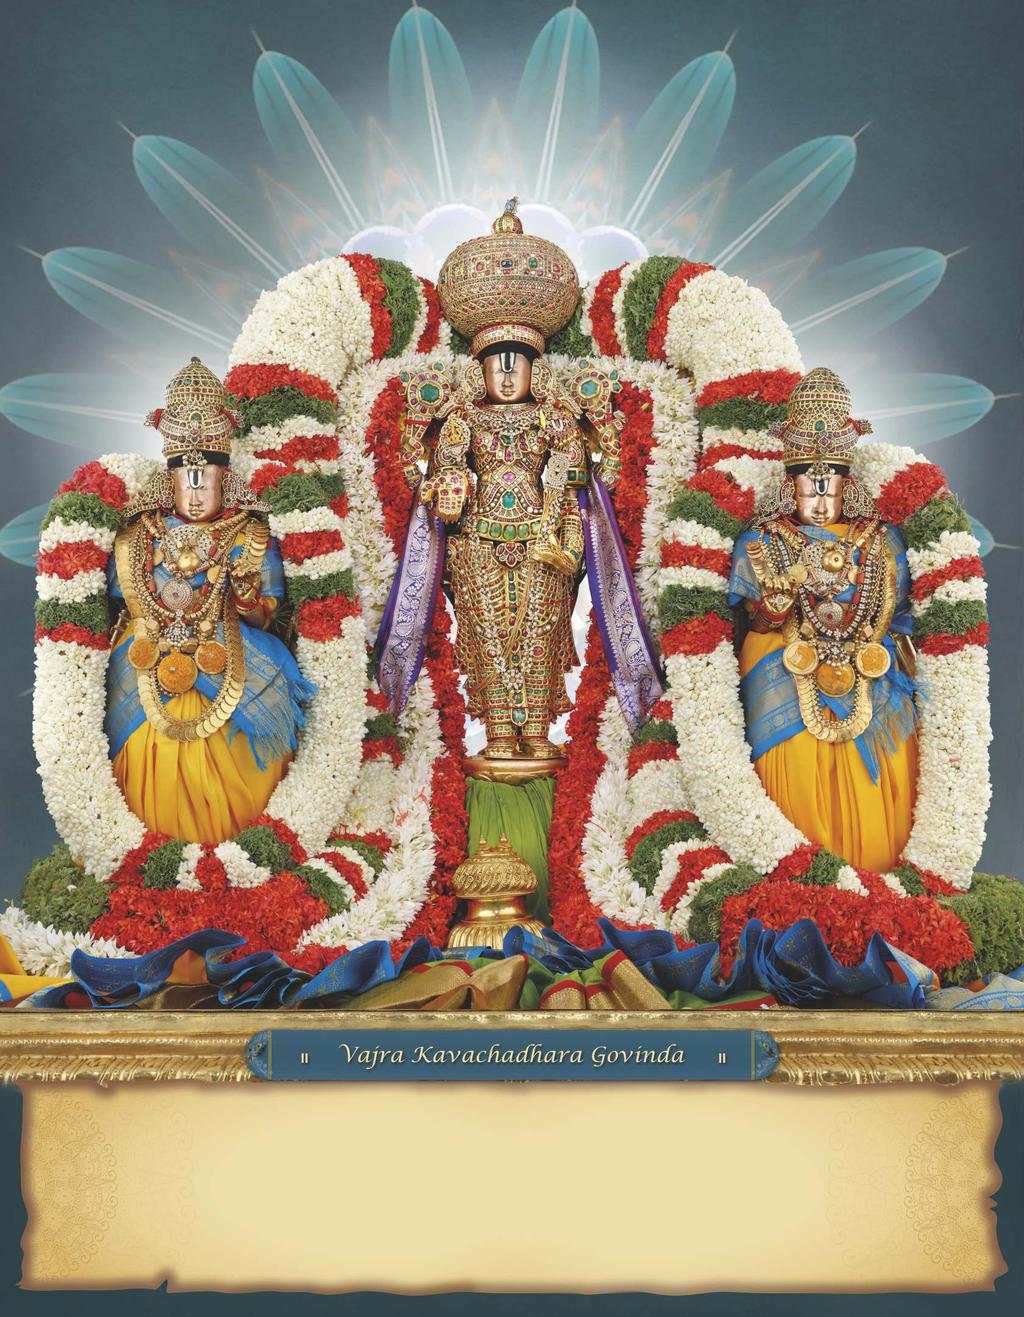 Tirumala Devasthanams Sri Malayappa Swamivaru with His Consorts, Sridevi & Bhoodevi, Tirumala June 2018 Fri Sat Sun Mon Tue Wed Thu Fri Sat Sun Mon Tue Wed Thu Fri Sat Sun 18 19 20 21 22 23 24 25 26